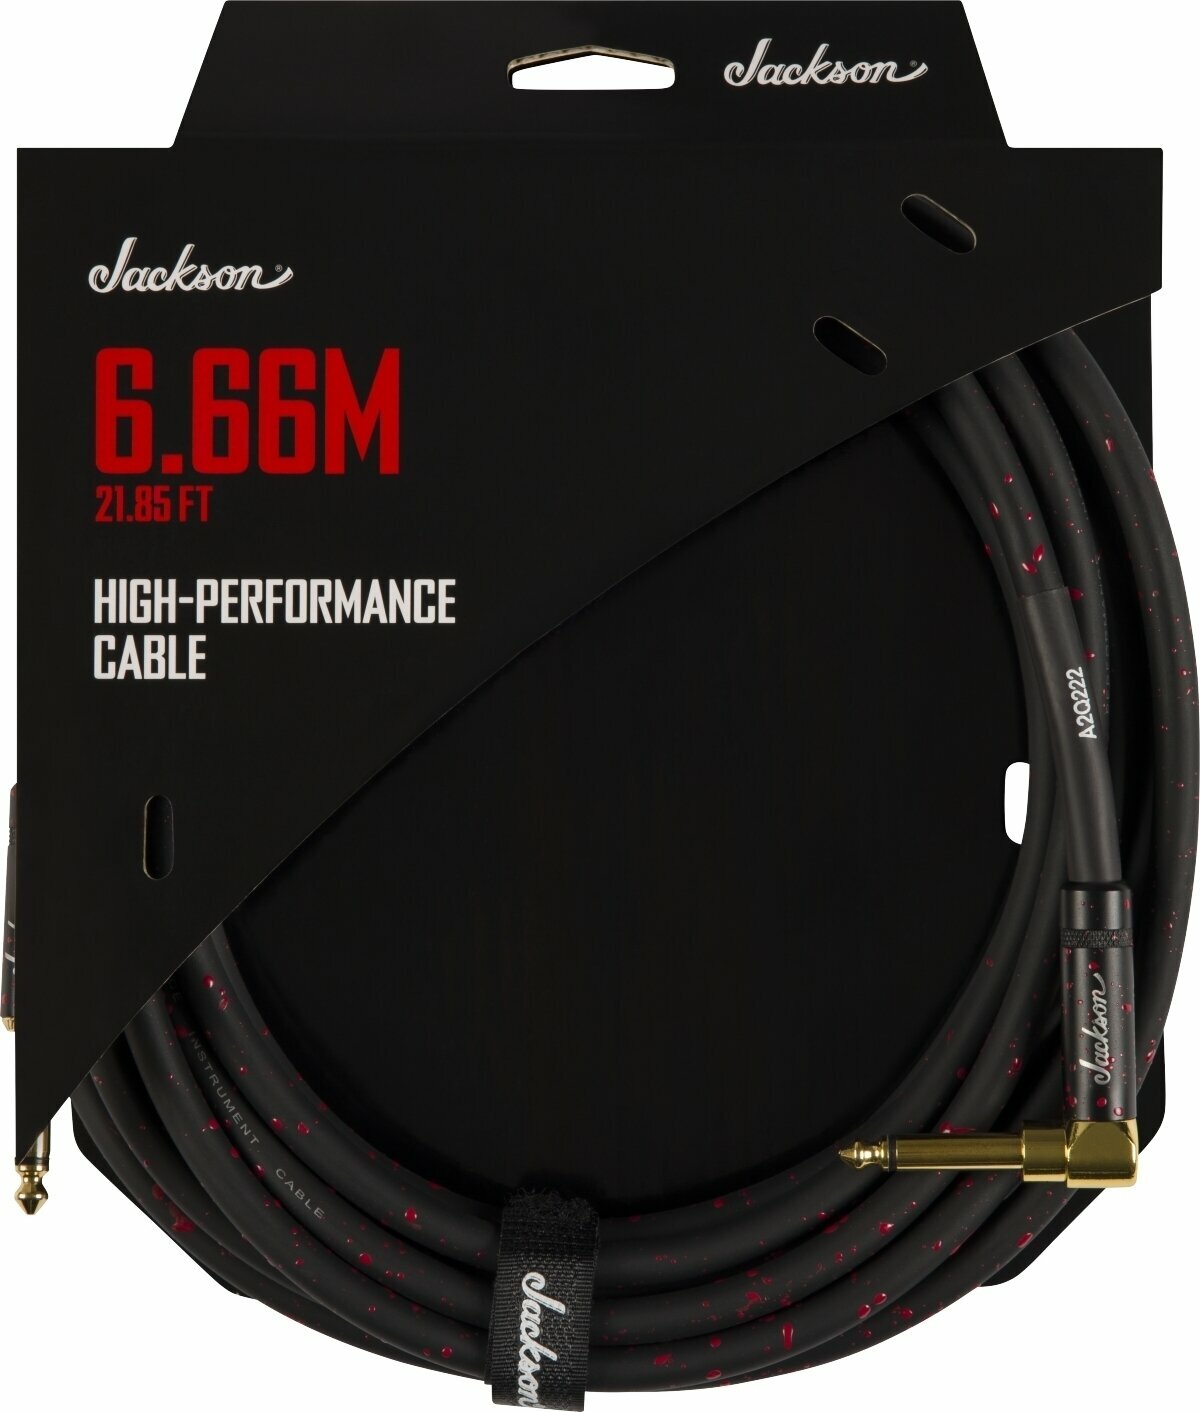 Nástrojový kábel Jackson High Performance Cable Červená-Čierna 6,66 m Rovný - Zalomený